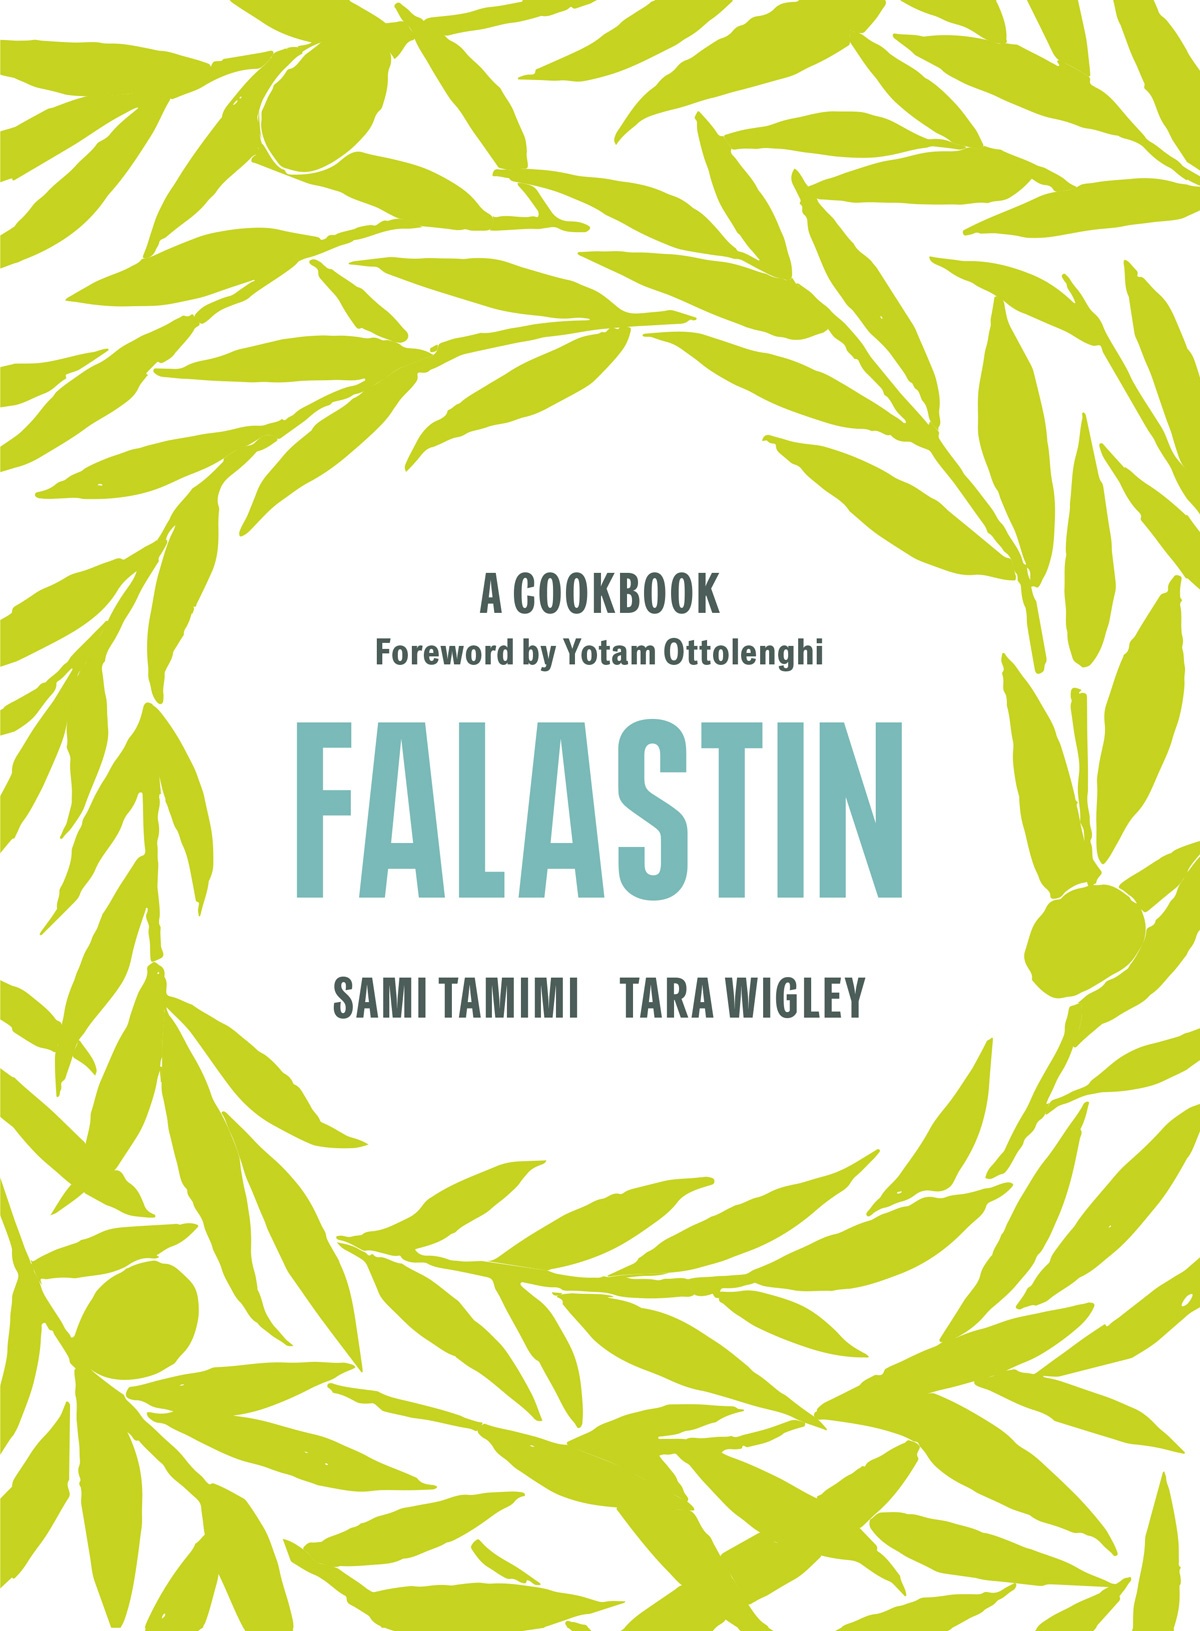 Book cover of Falastin by Sami Tamimi and Tara Wigley